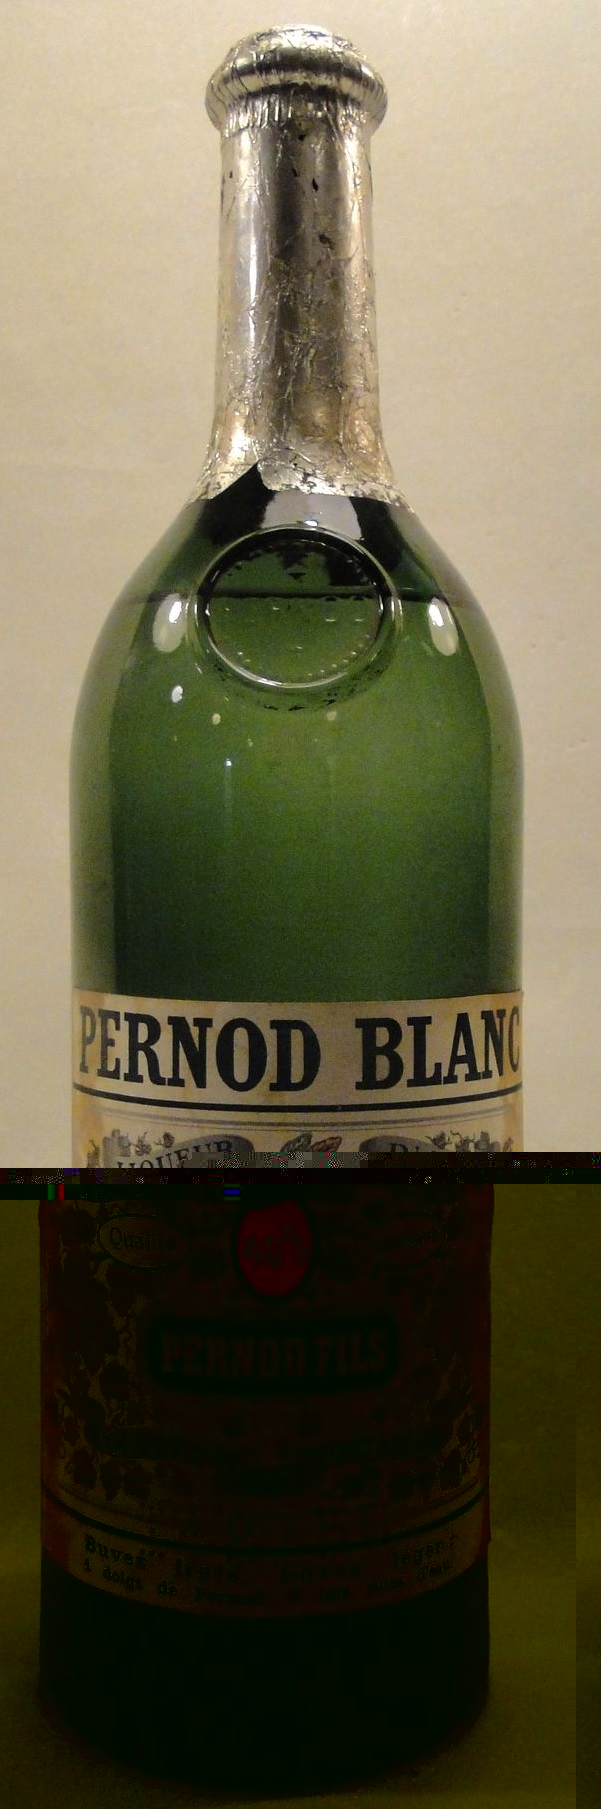 Pernod Blank